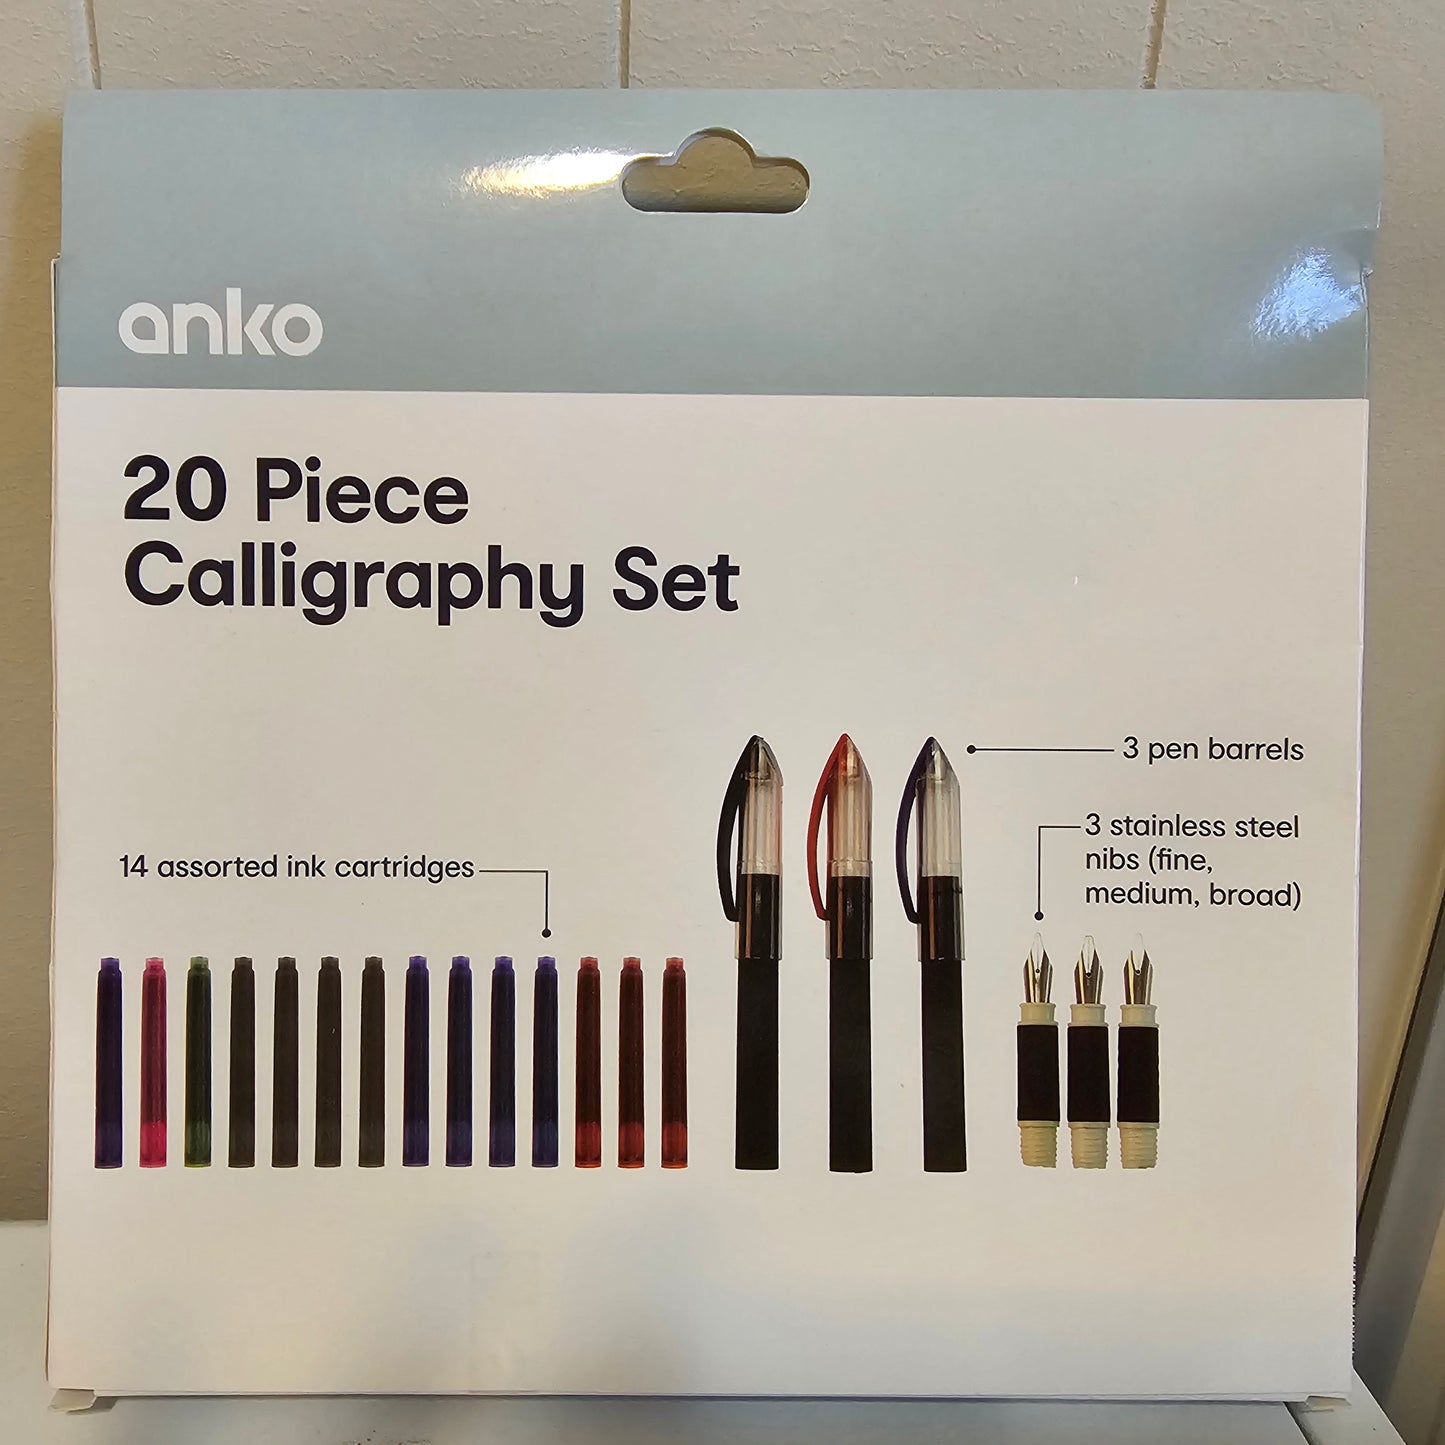 Supplies - Anko 20 Piece Calligraphy Set